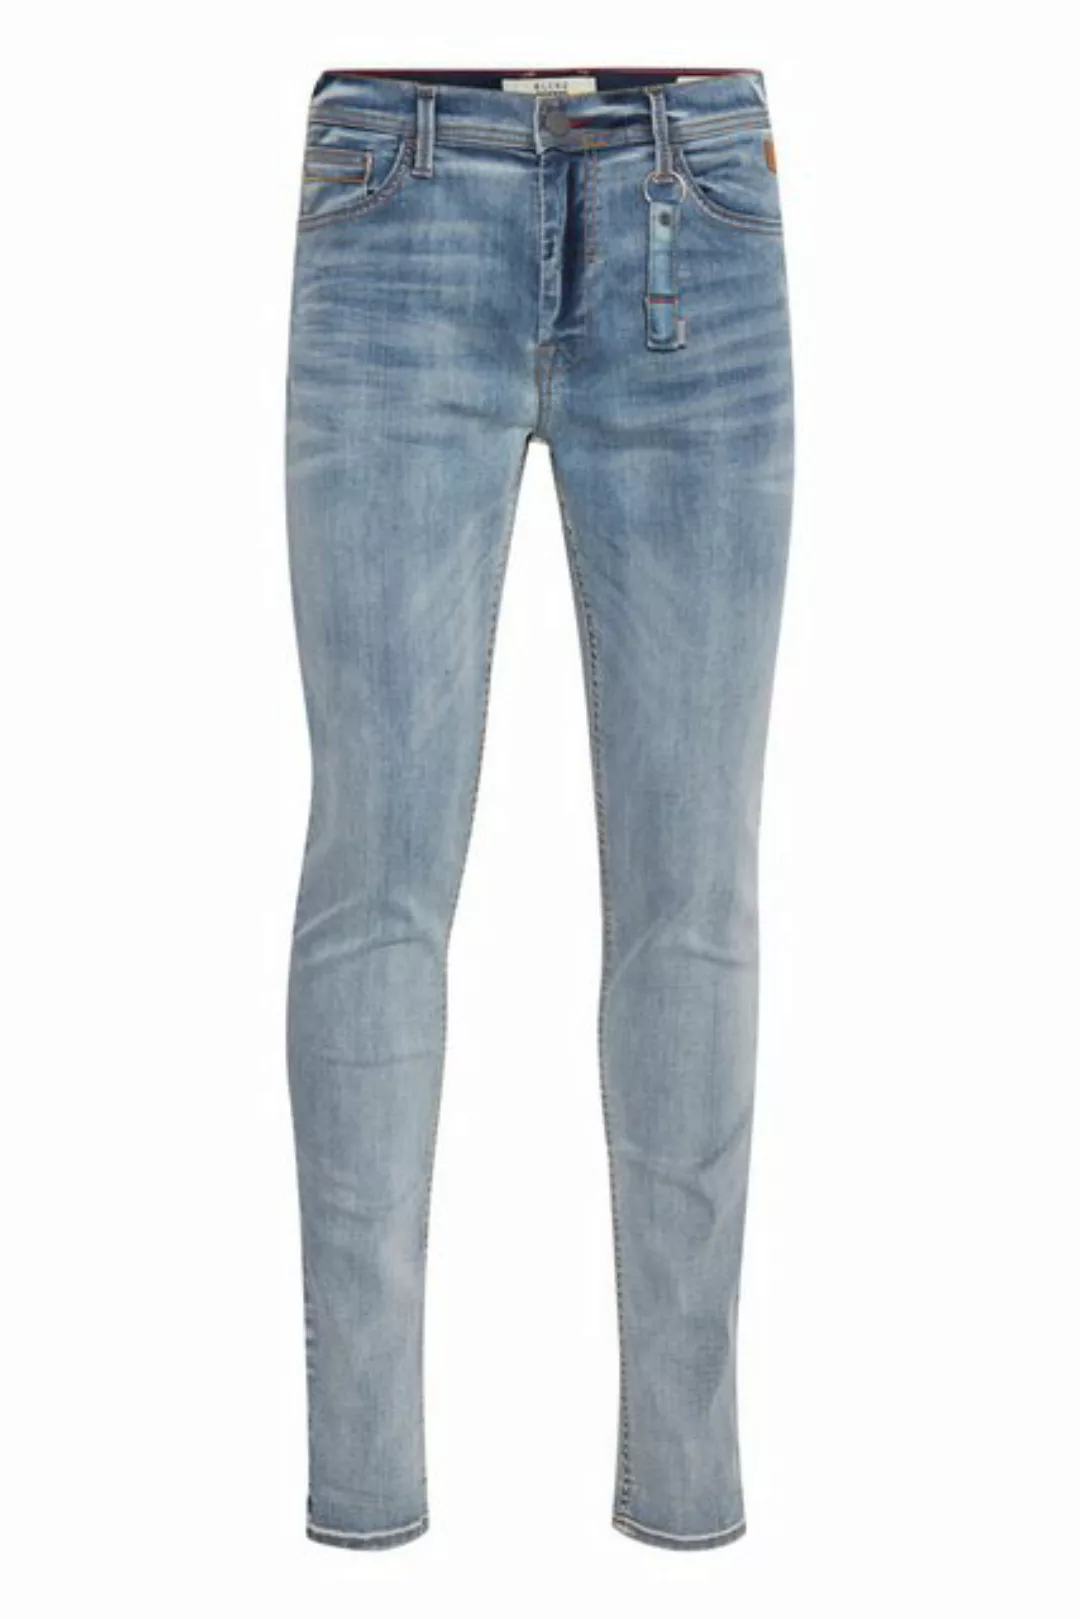 Blend 5-Pocket-Jeans BLEND JEANS TWISTER denim bleach blue 20710043.76198 - günstig online kaufen